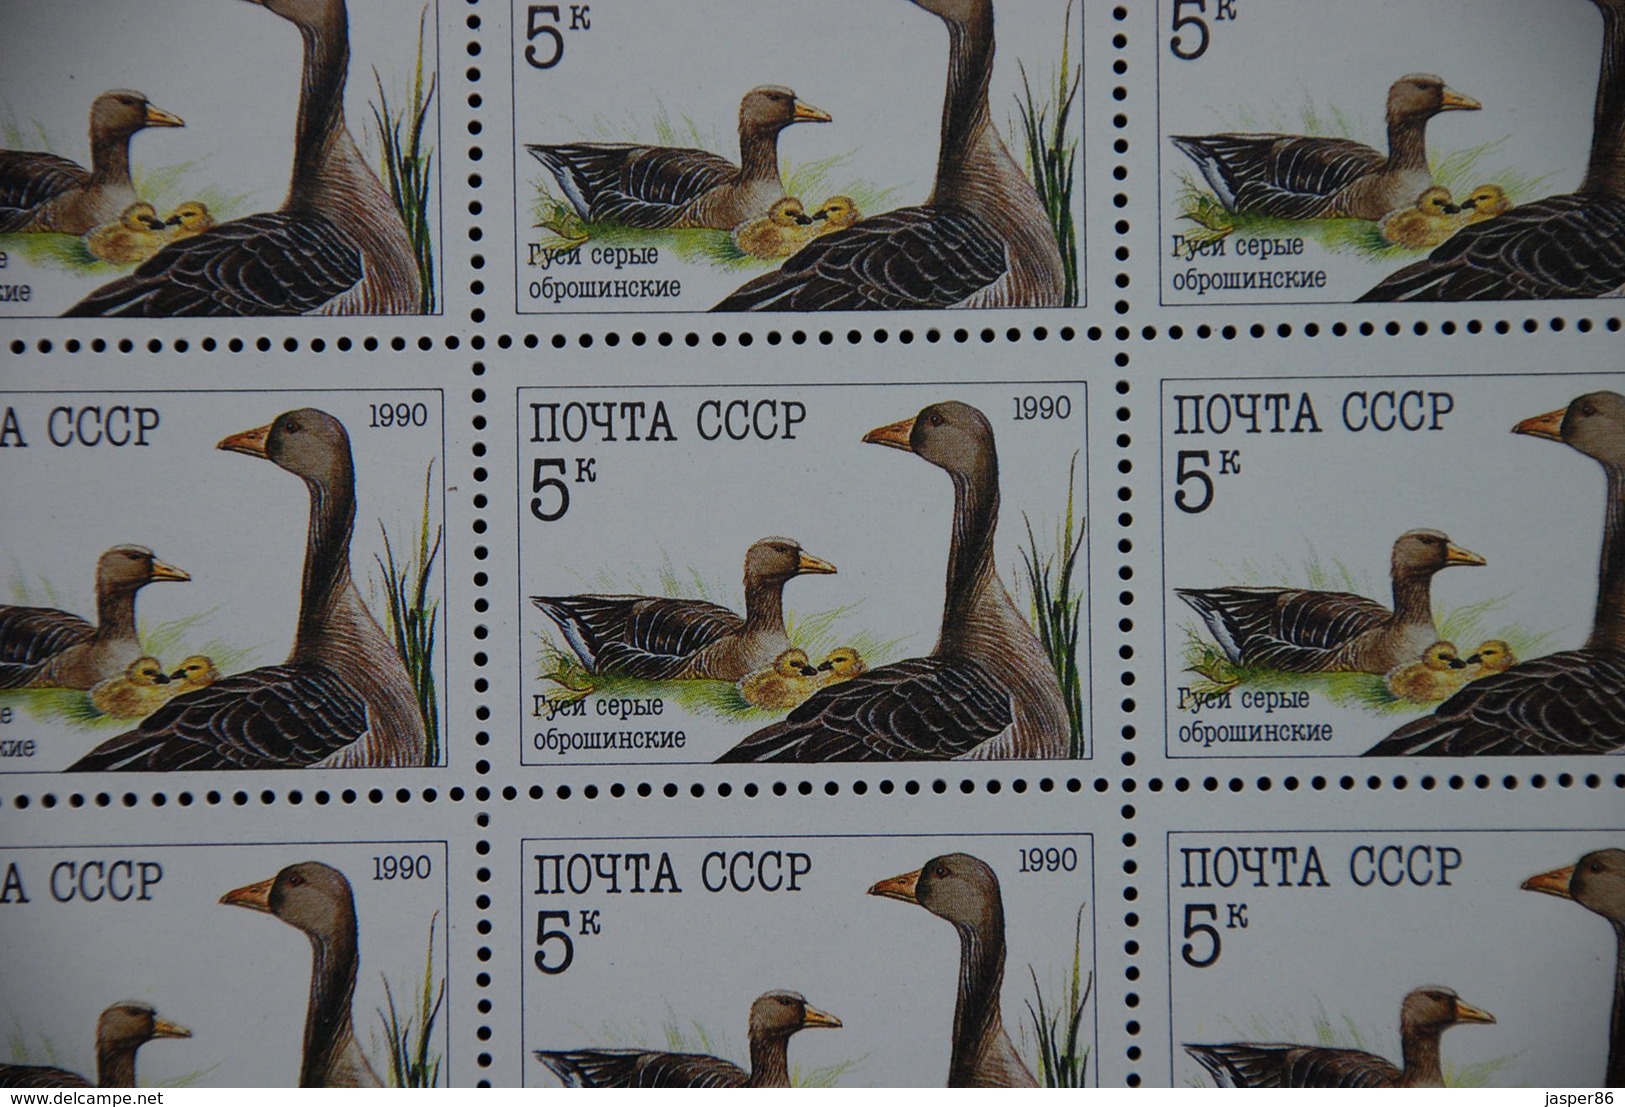 RUSSIA 1990 MNH Sc 5909-5911, Mi 6102-6104 Geese, Rooster, Turkey CV40.00 - Hojas Completas